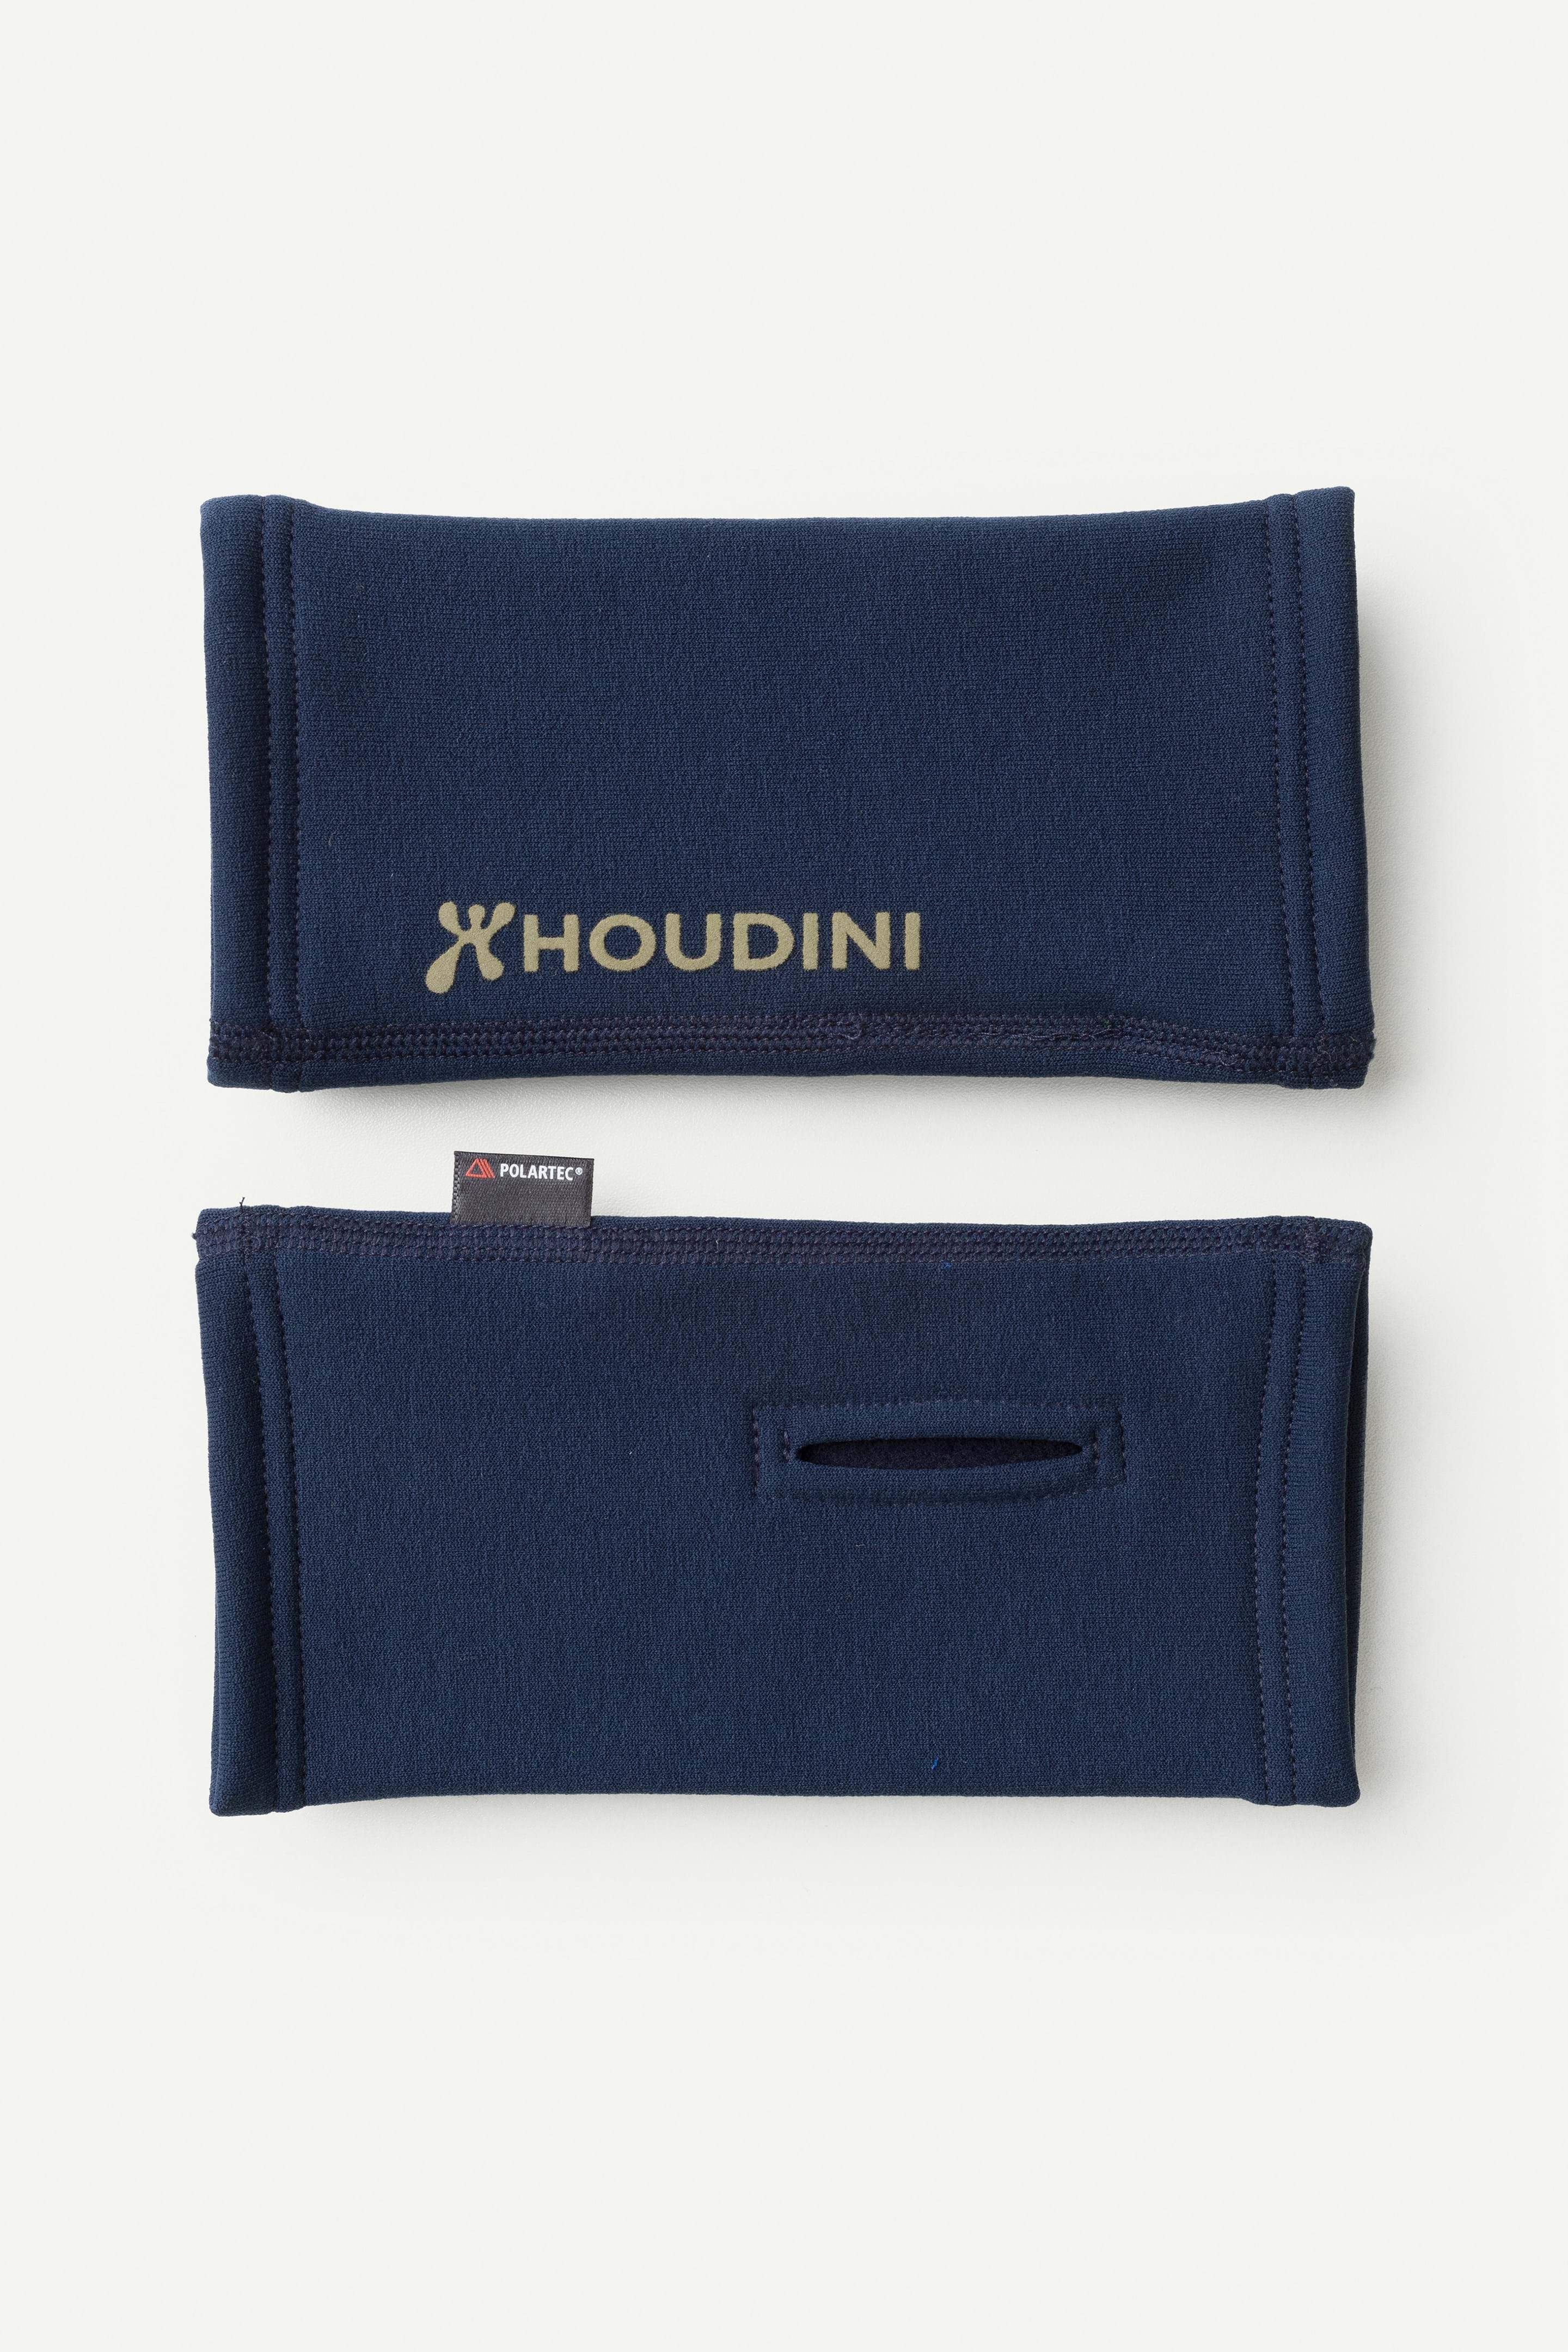 Houdini Unisex Power Wrist Gaiters, Blue Illusion / L